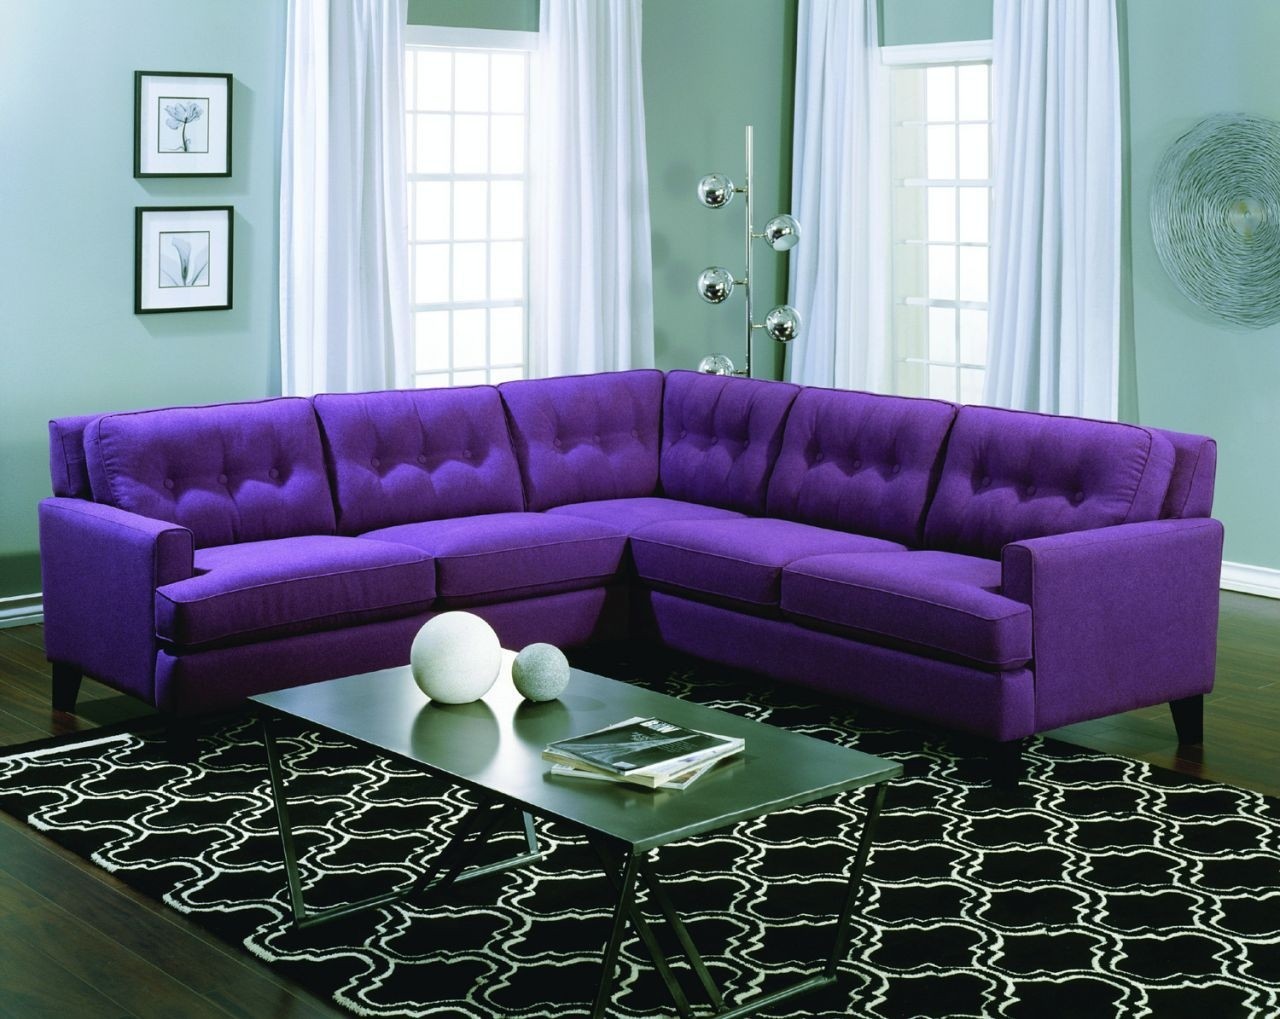 Purple sectional sofa living room decor sectional